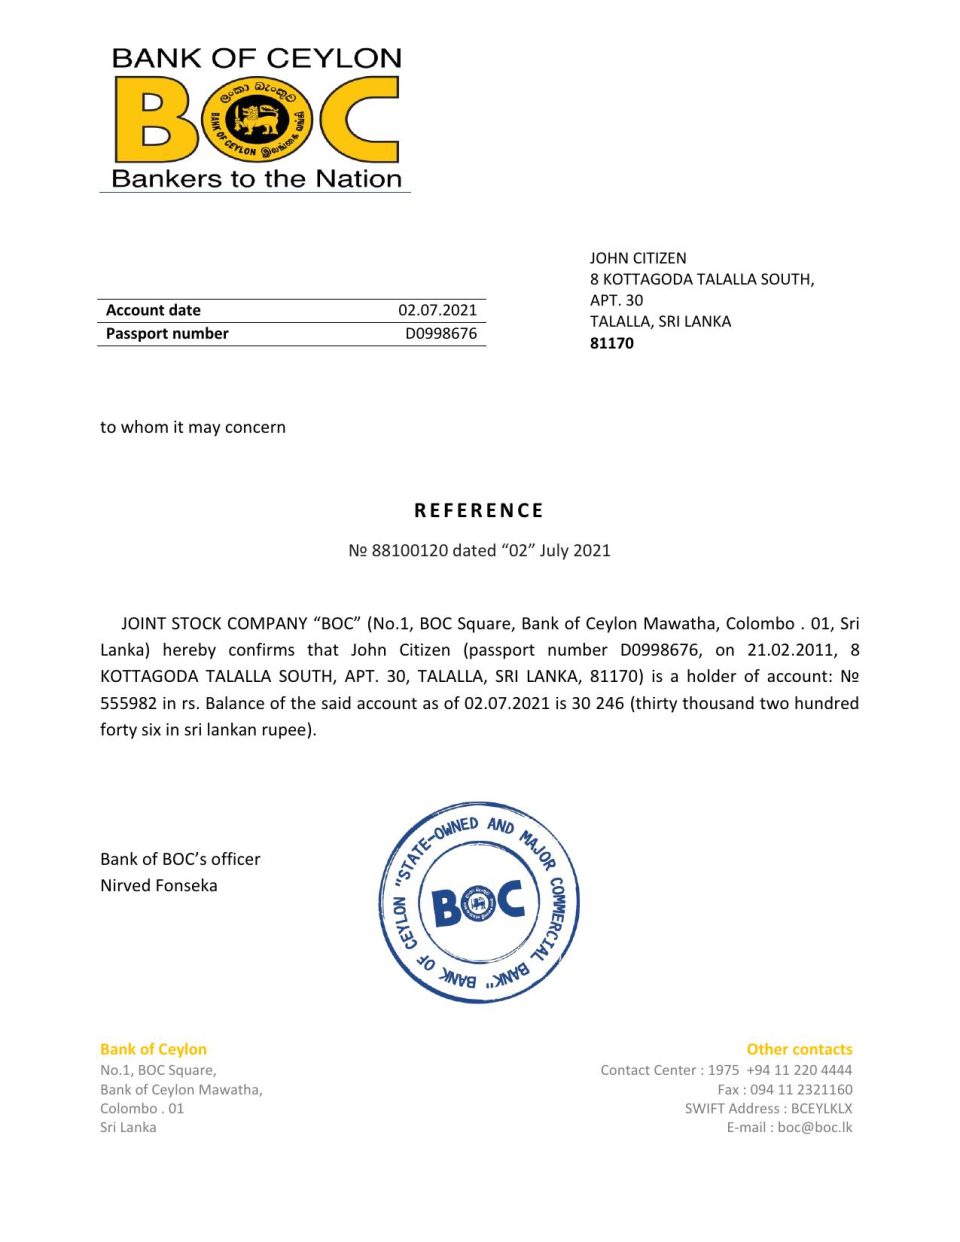 Download Sri Lanka BOC Bank Reference Letter Templates | Editable Word